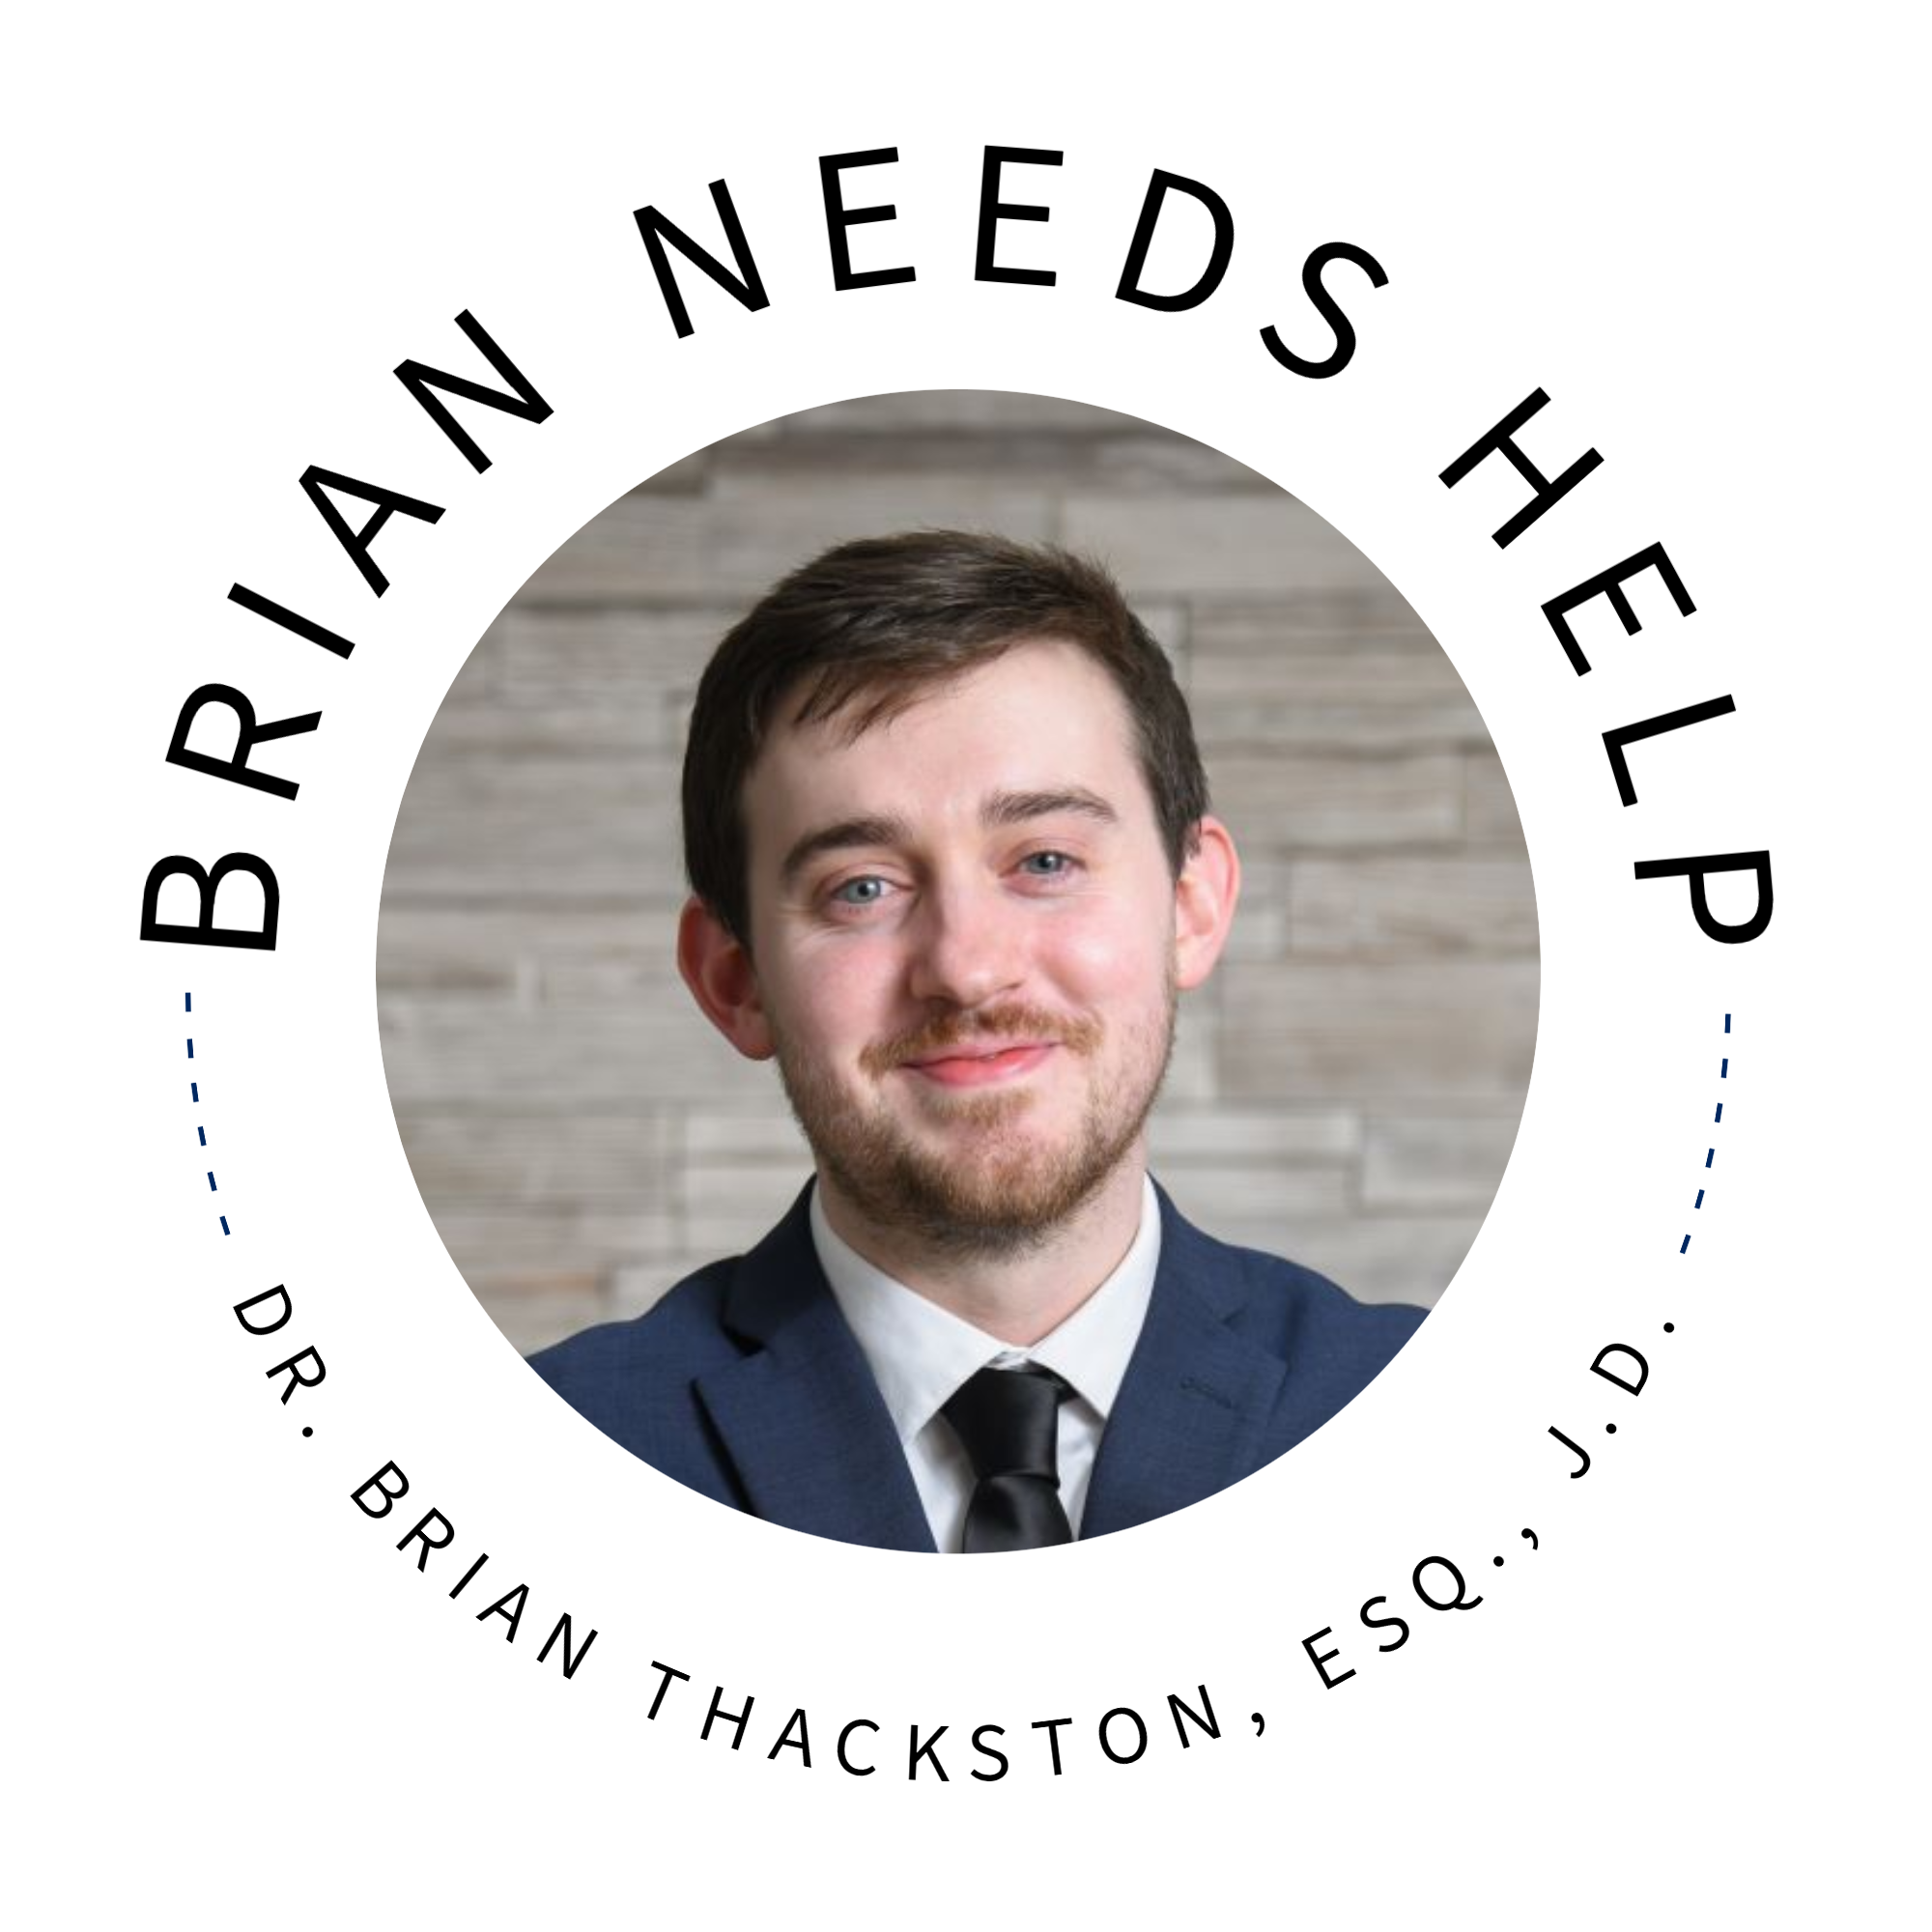 Brian Needs Help